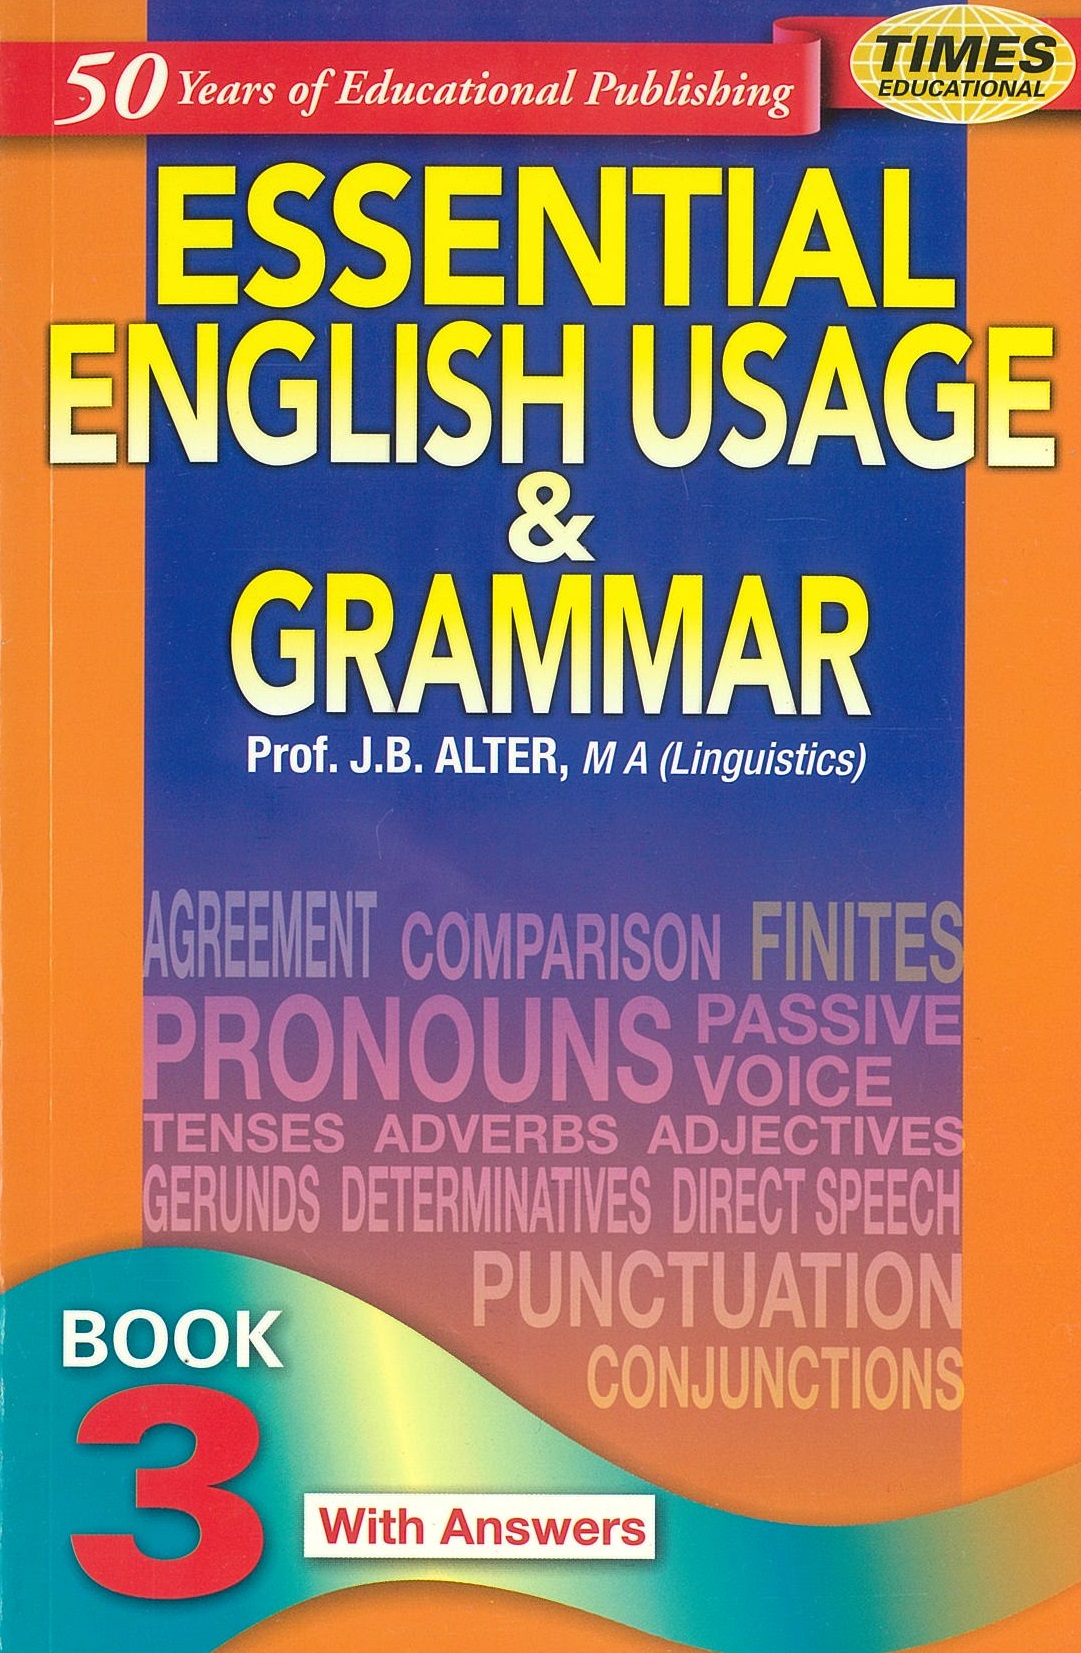 ESSENTIAL ENGLISH USAGE & GRAMMAR BOOK 3